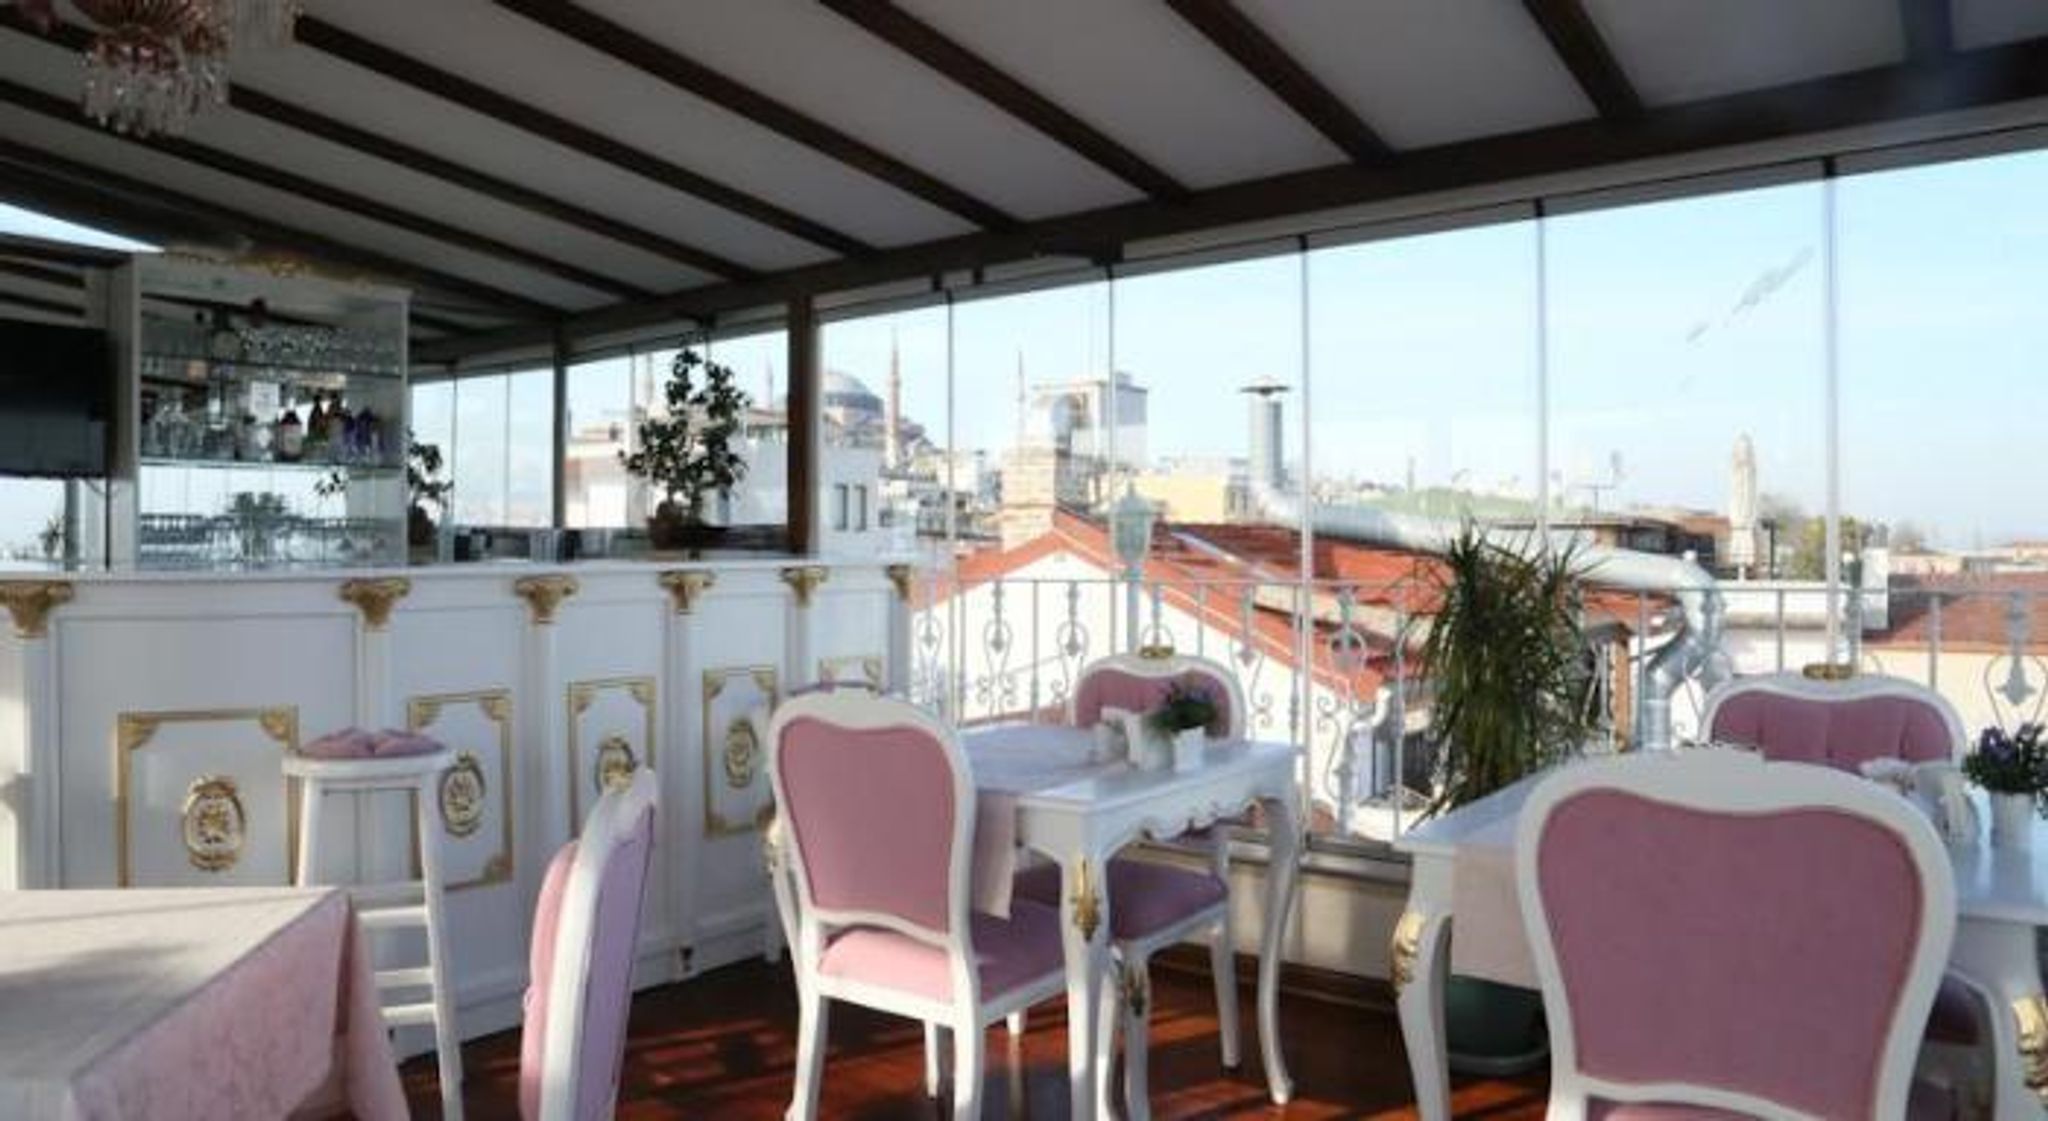 Romantic Hotel Istanbul